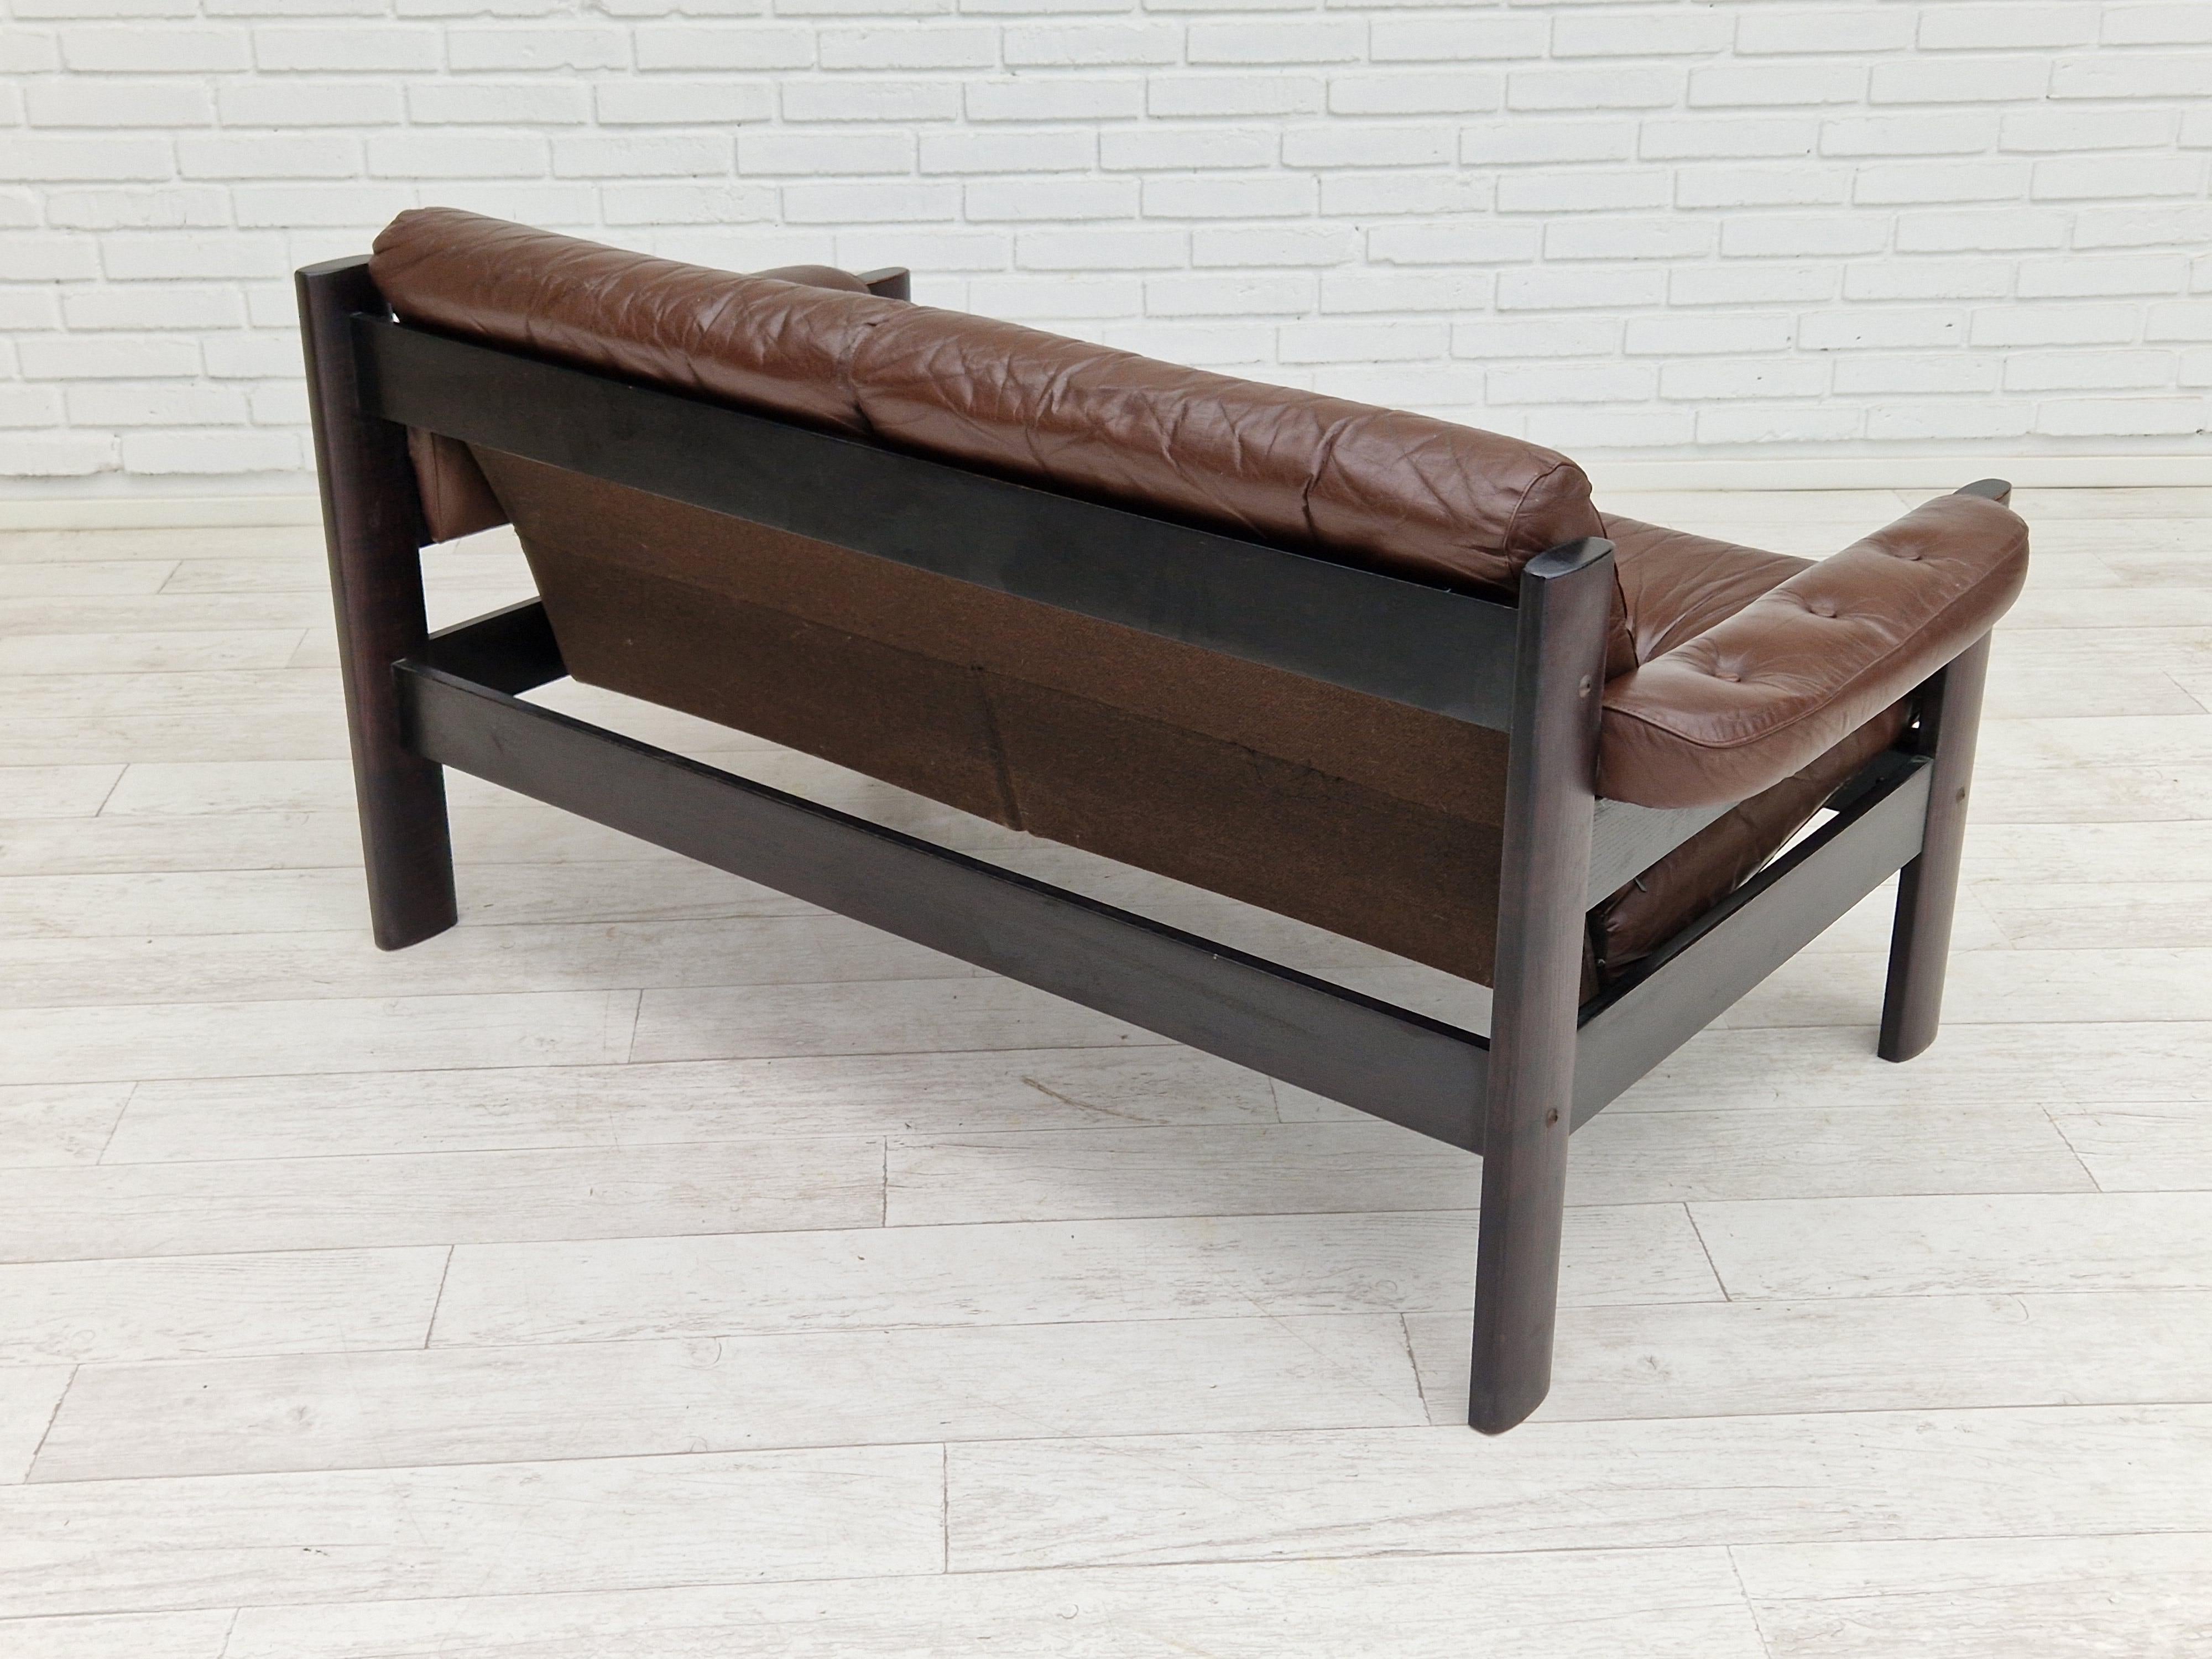 1970s, Scandinavian 2-Seater Sofa, Original Condition, Brown Leather 2